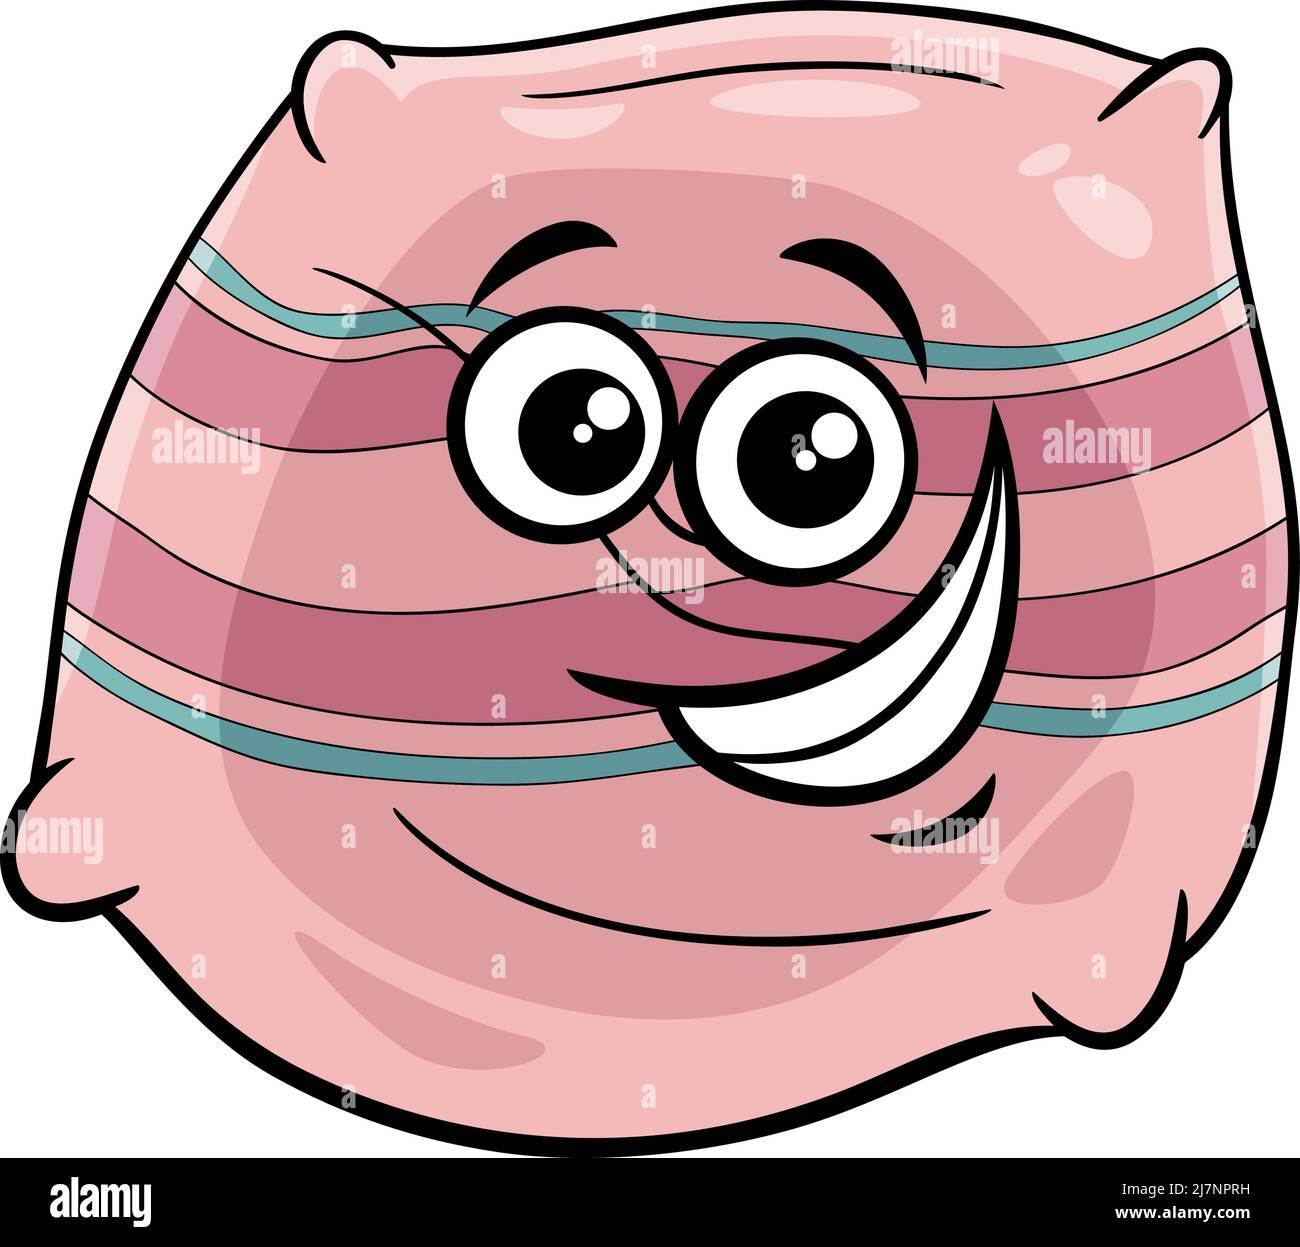 https://c8.alamy.com/comp/2J7NPRH/cartoon-illustration-of-pillow-object-clip-art-comic-character-2J7NPRH.jpg